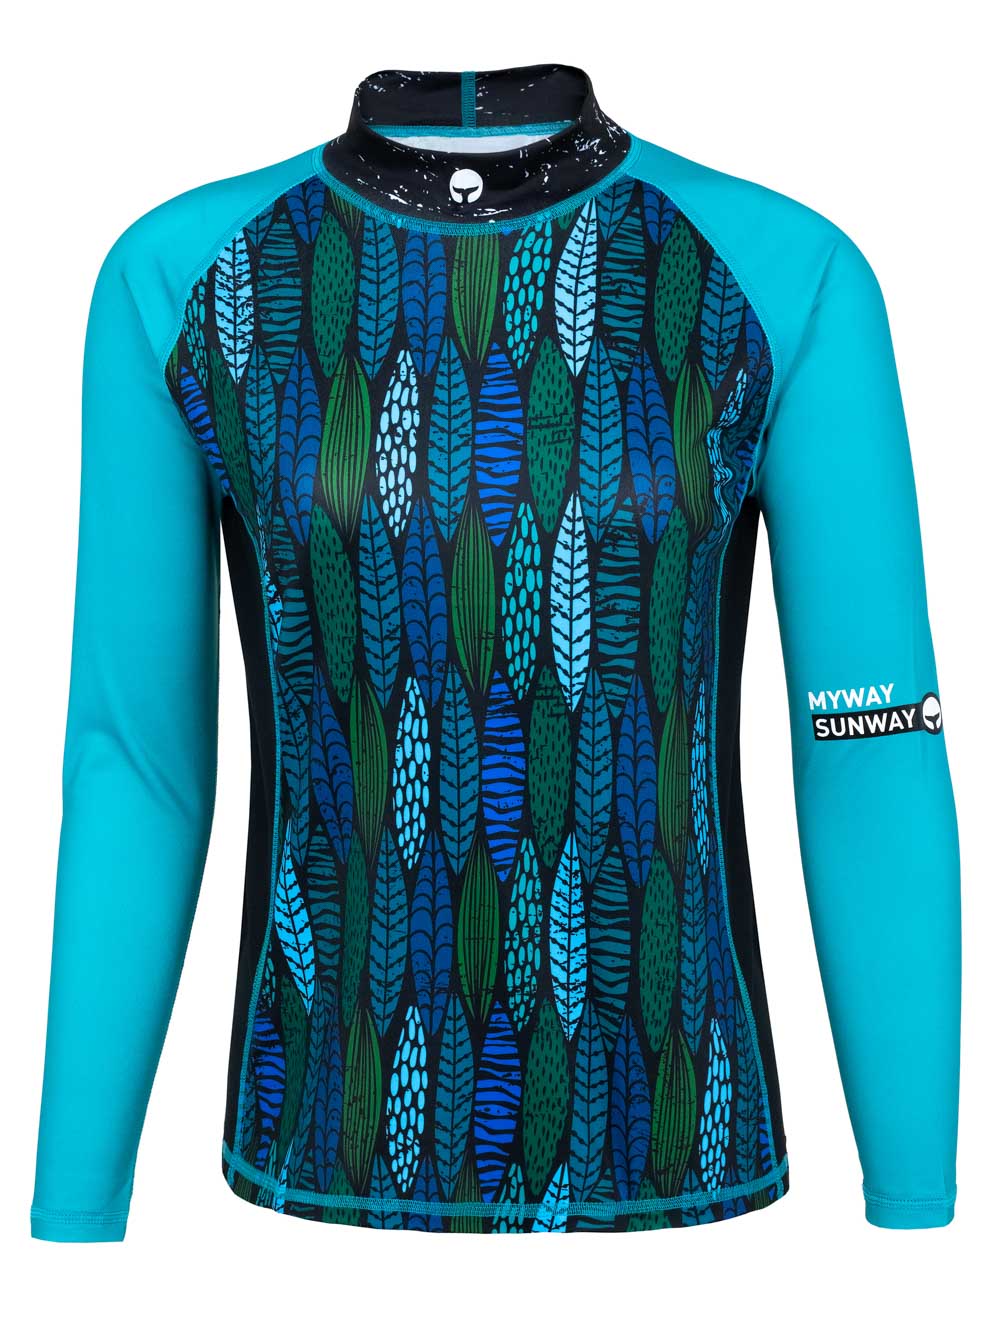 Women's Long Sleeves Rashguard UV Swim Shirt 032